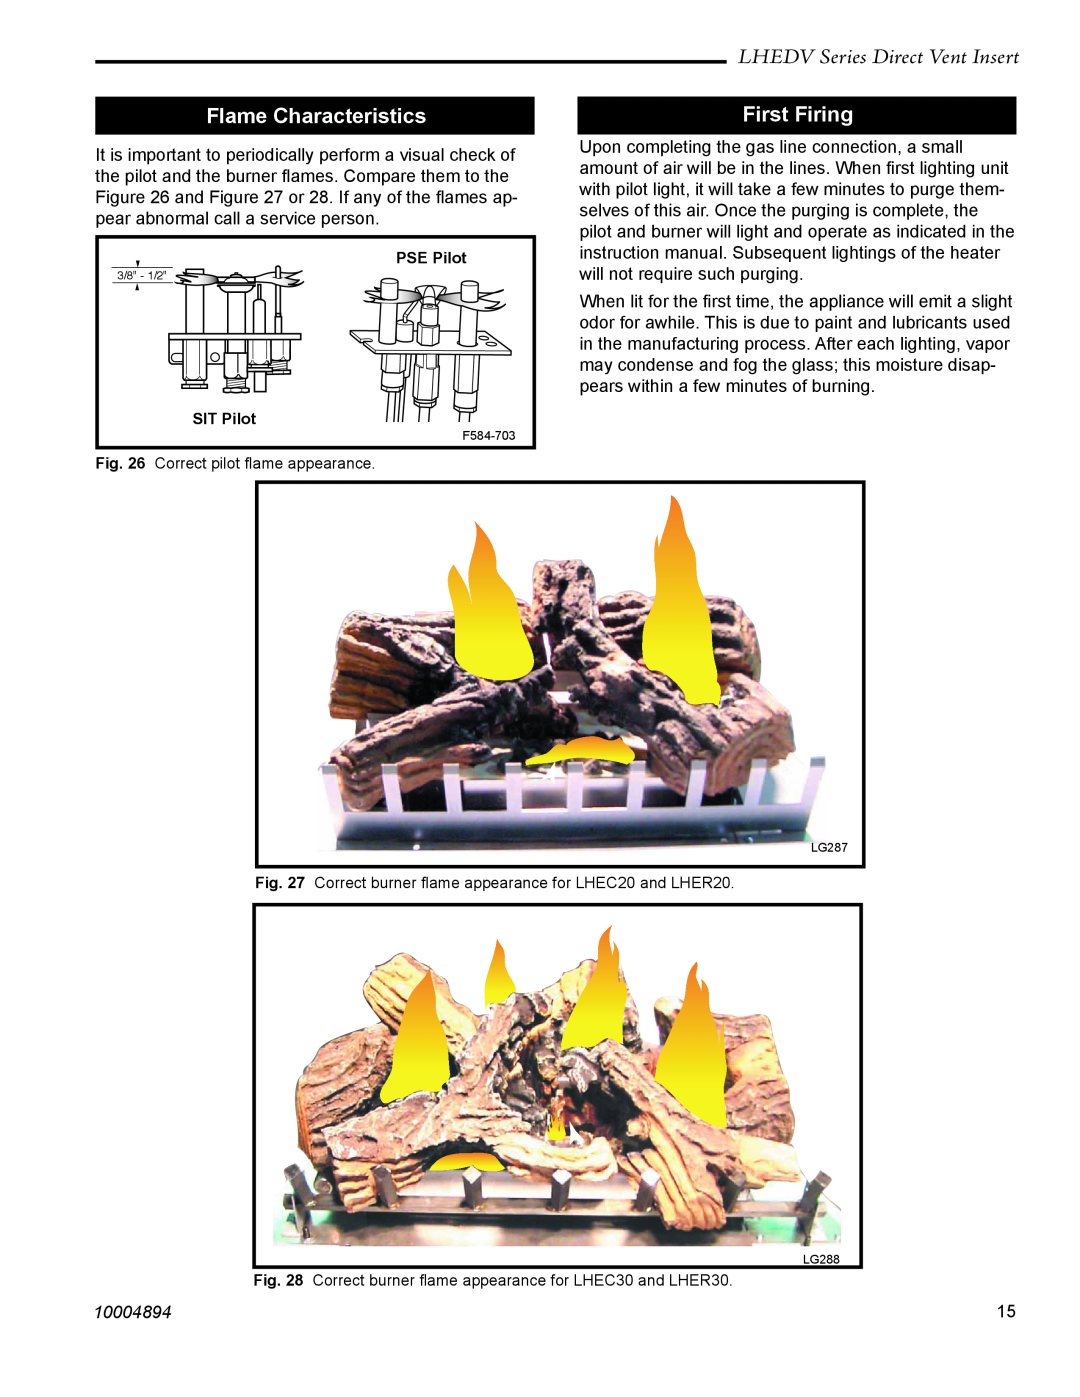 Vermont Casting LHECDV20 manual Flame Characteristics, First Firing, LHEDV Series Direct Vent Insert, 10004894, PSE Pilot 